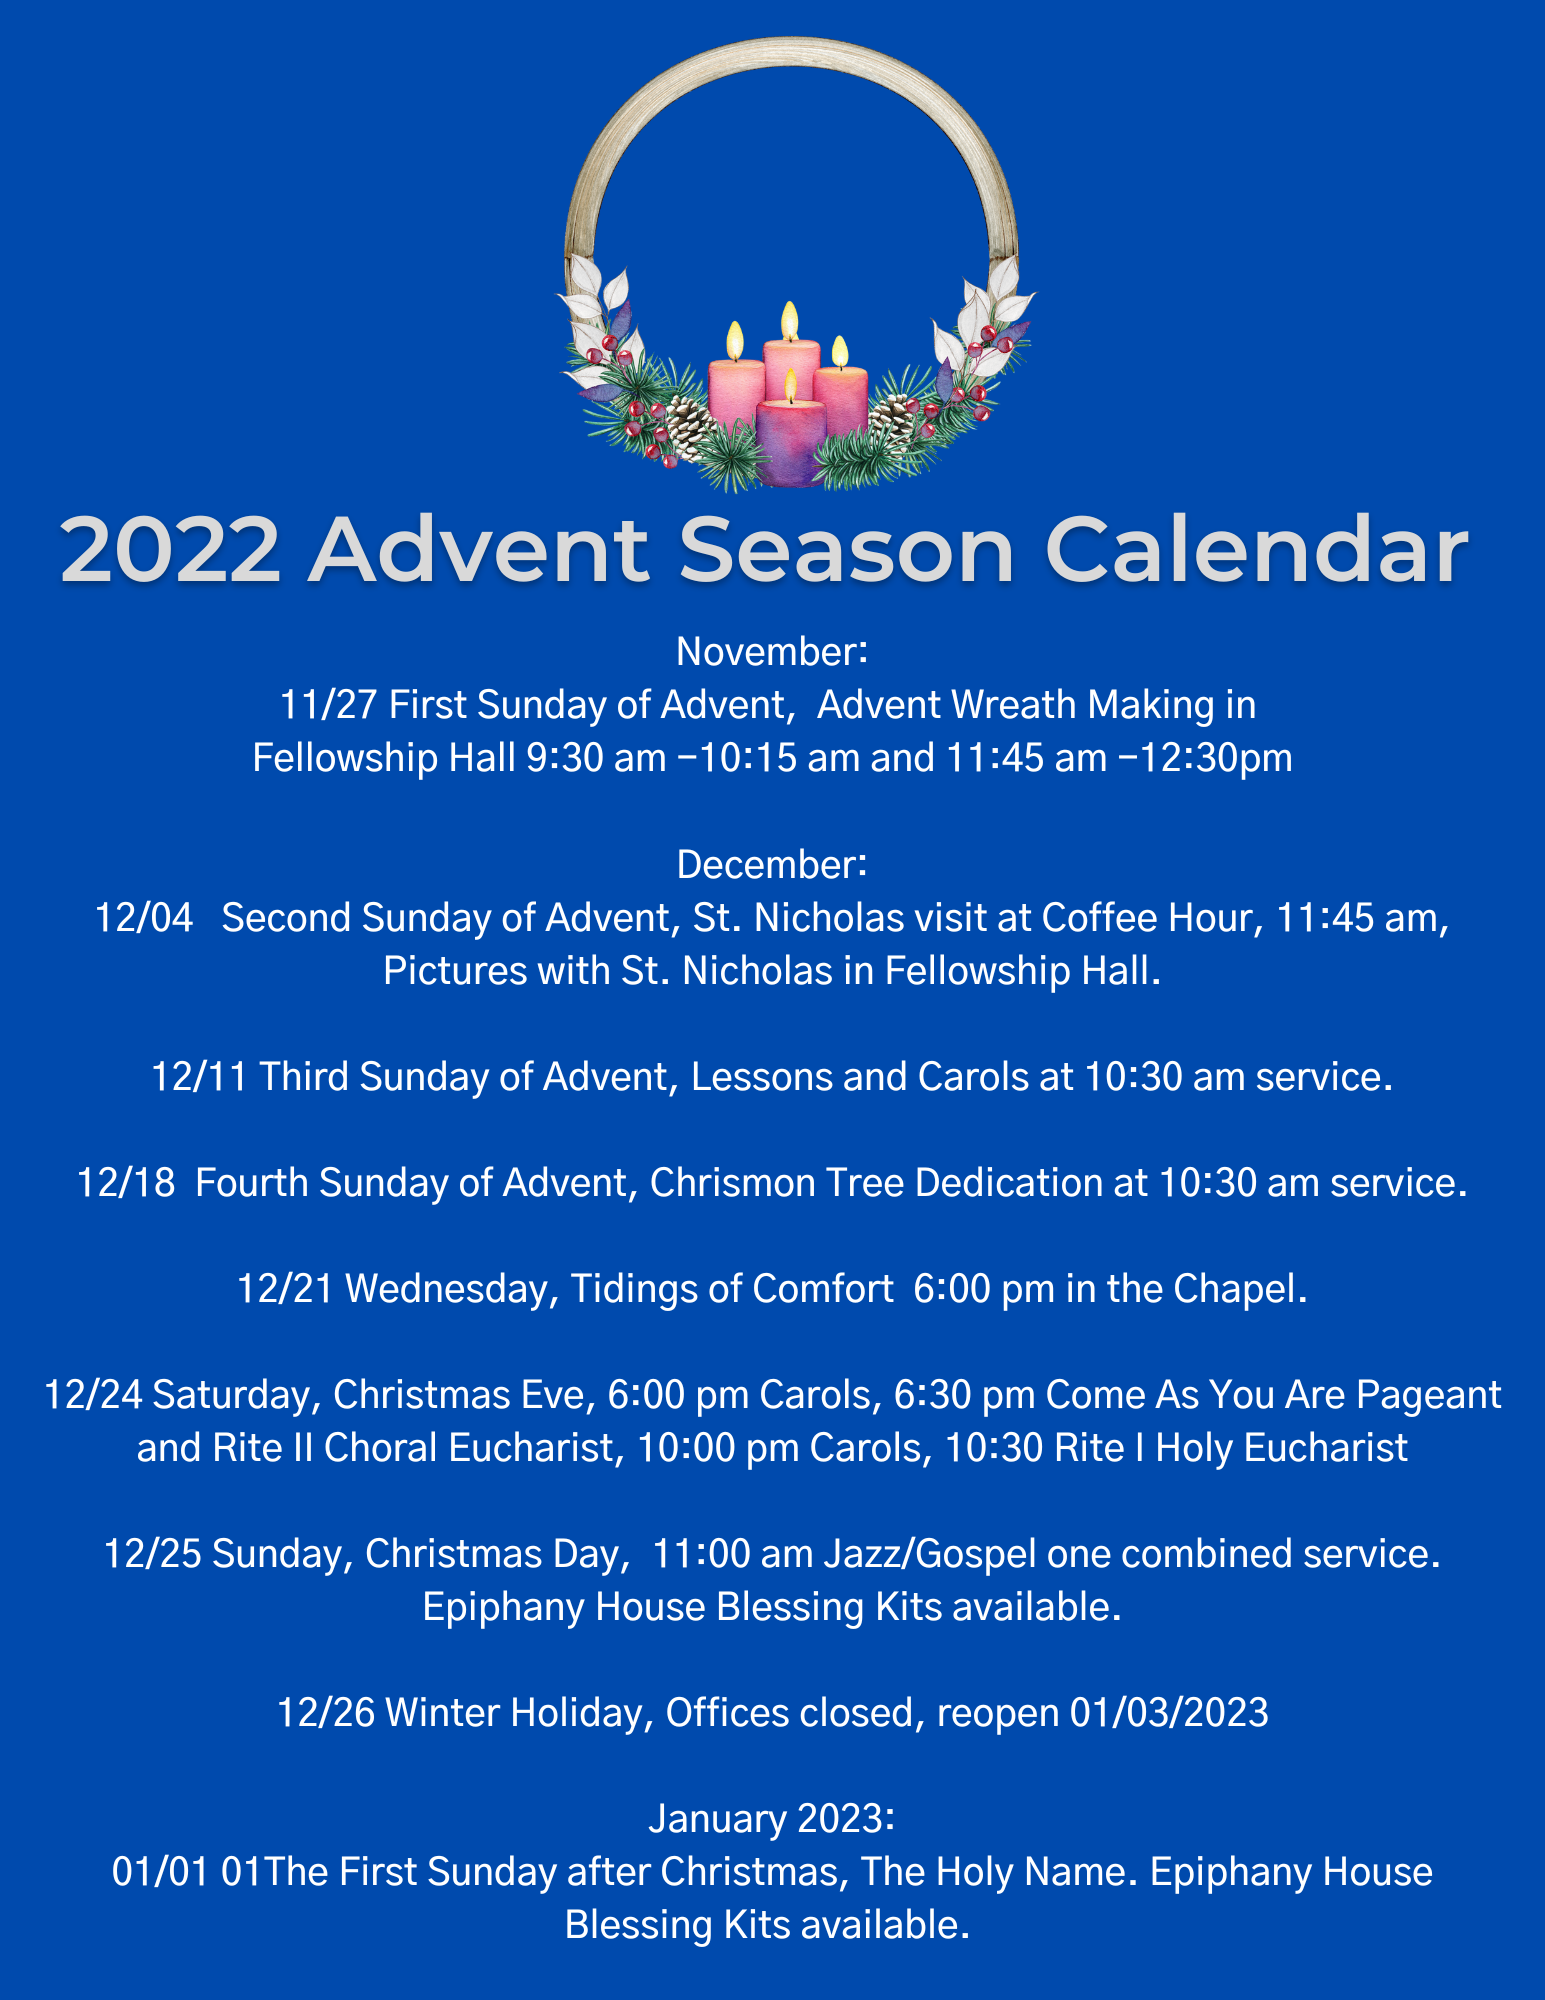 pg-33-2022-advent-season-calendar-4th-version_585